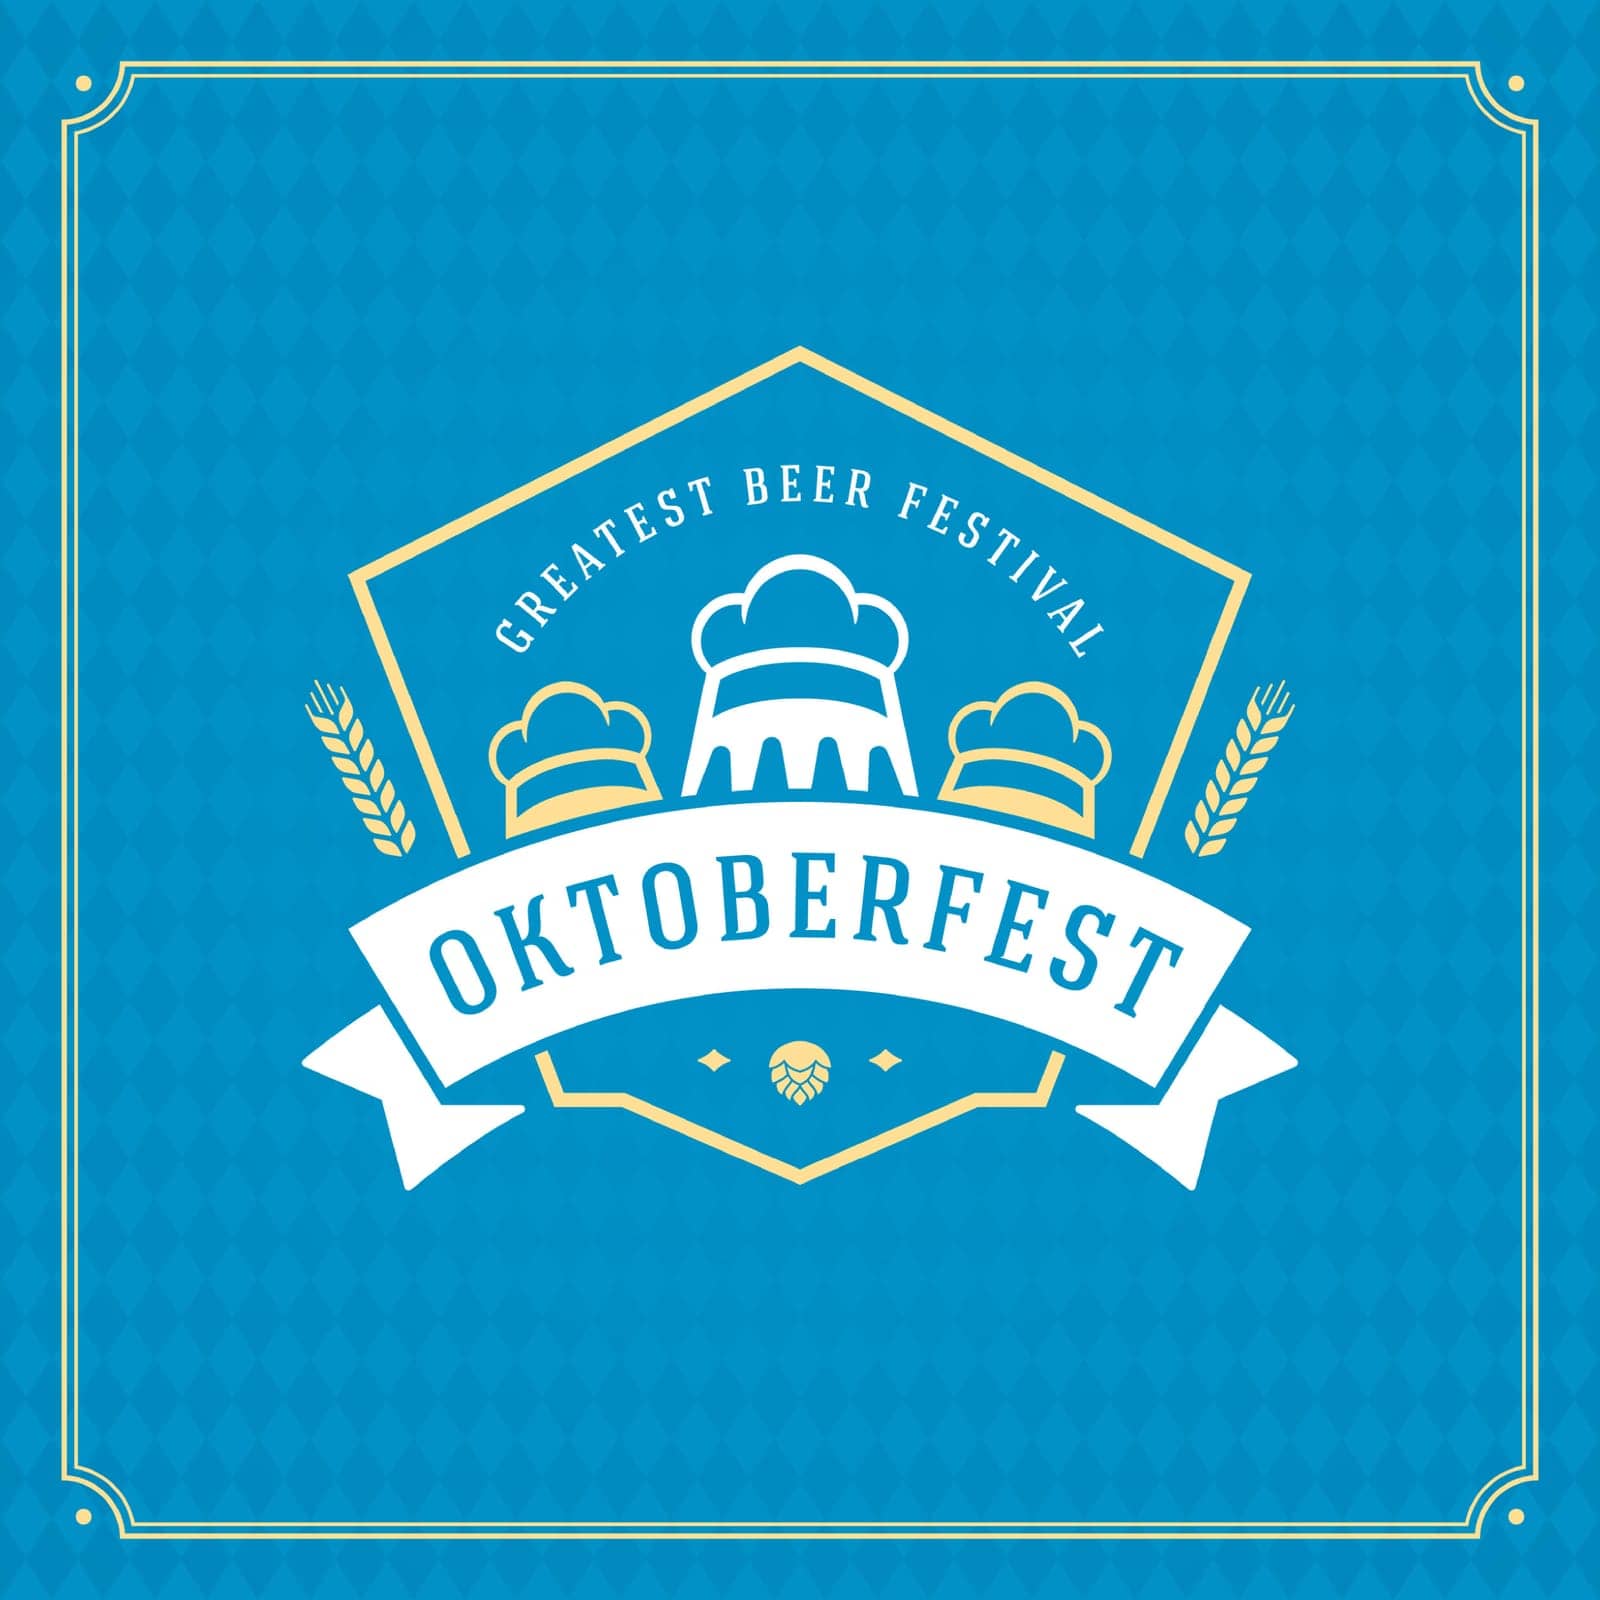 Oktoberfest beer festival celebration vintage greeting card or poster by ProVectors